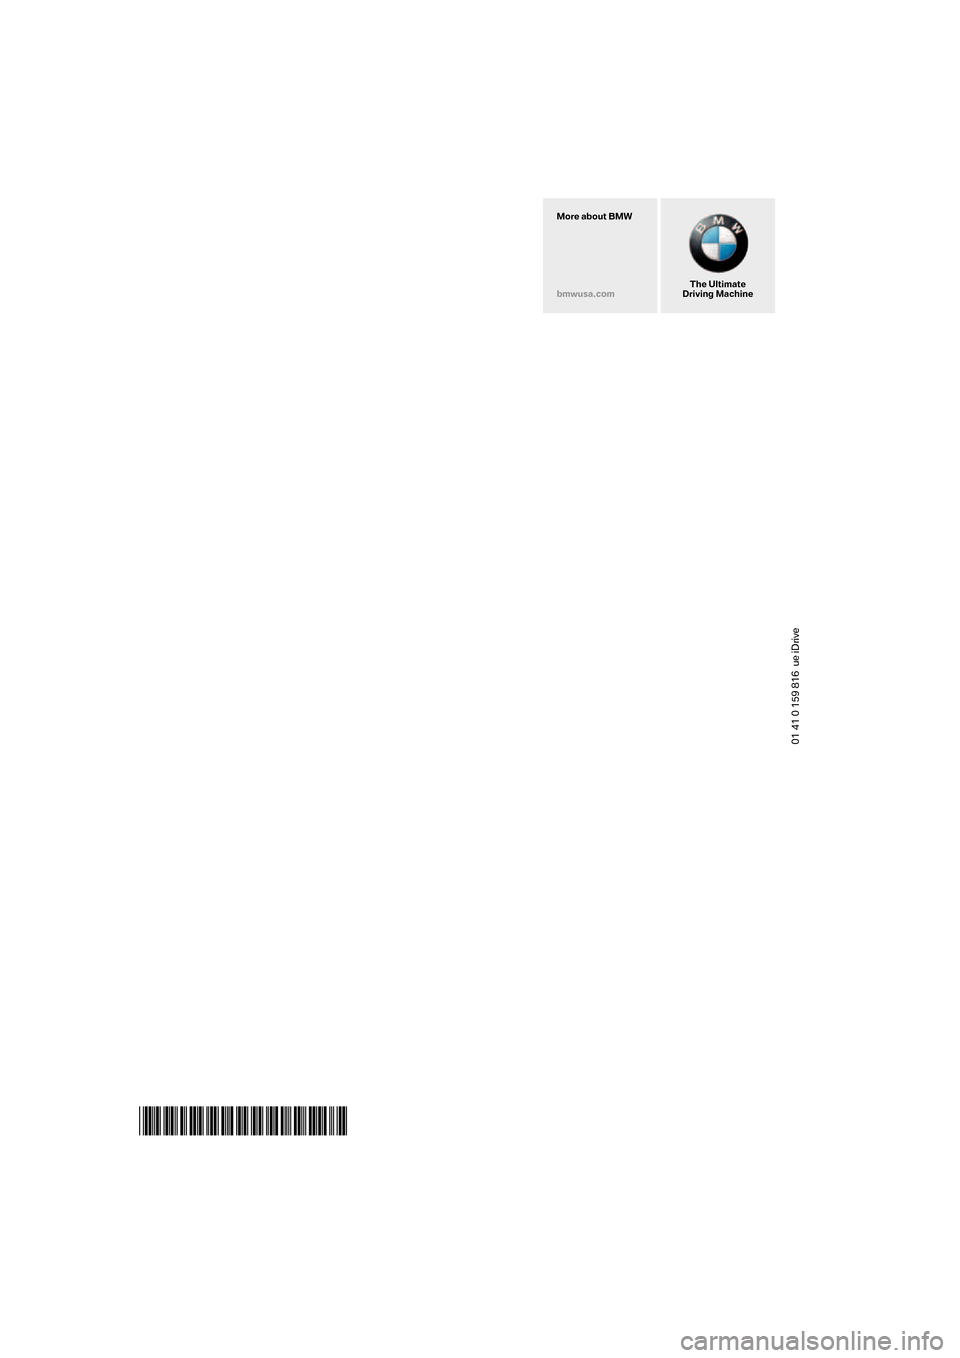 BMW 330XI SEDAN 2006 E90 Owners Manual 01 41 0 159 816  ue iDrive
*BL015981600E*
The Ultimate
Driving Machine More about BMW
bmwusa.com 